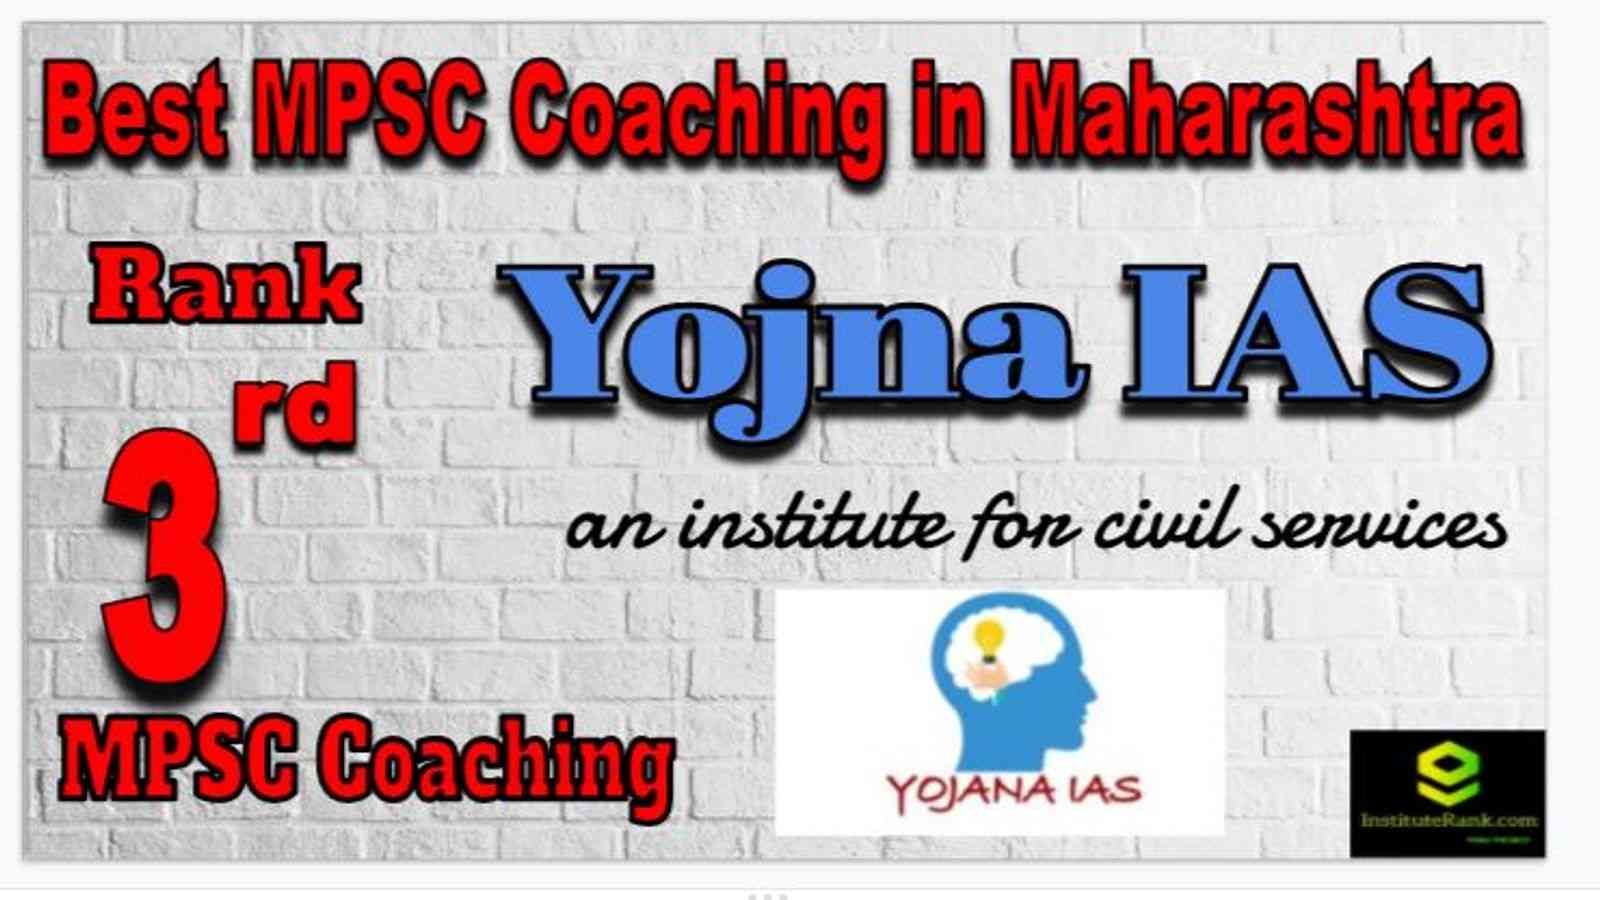 Rank 3 Best MPSC Coaching in Maharashtra